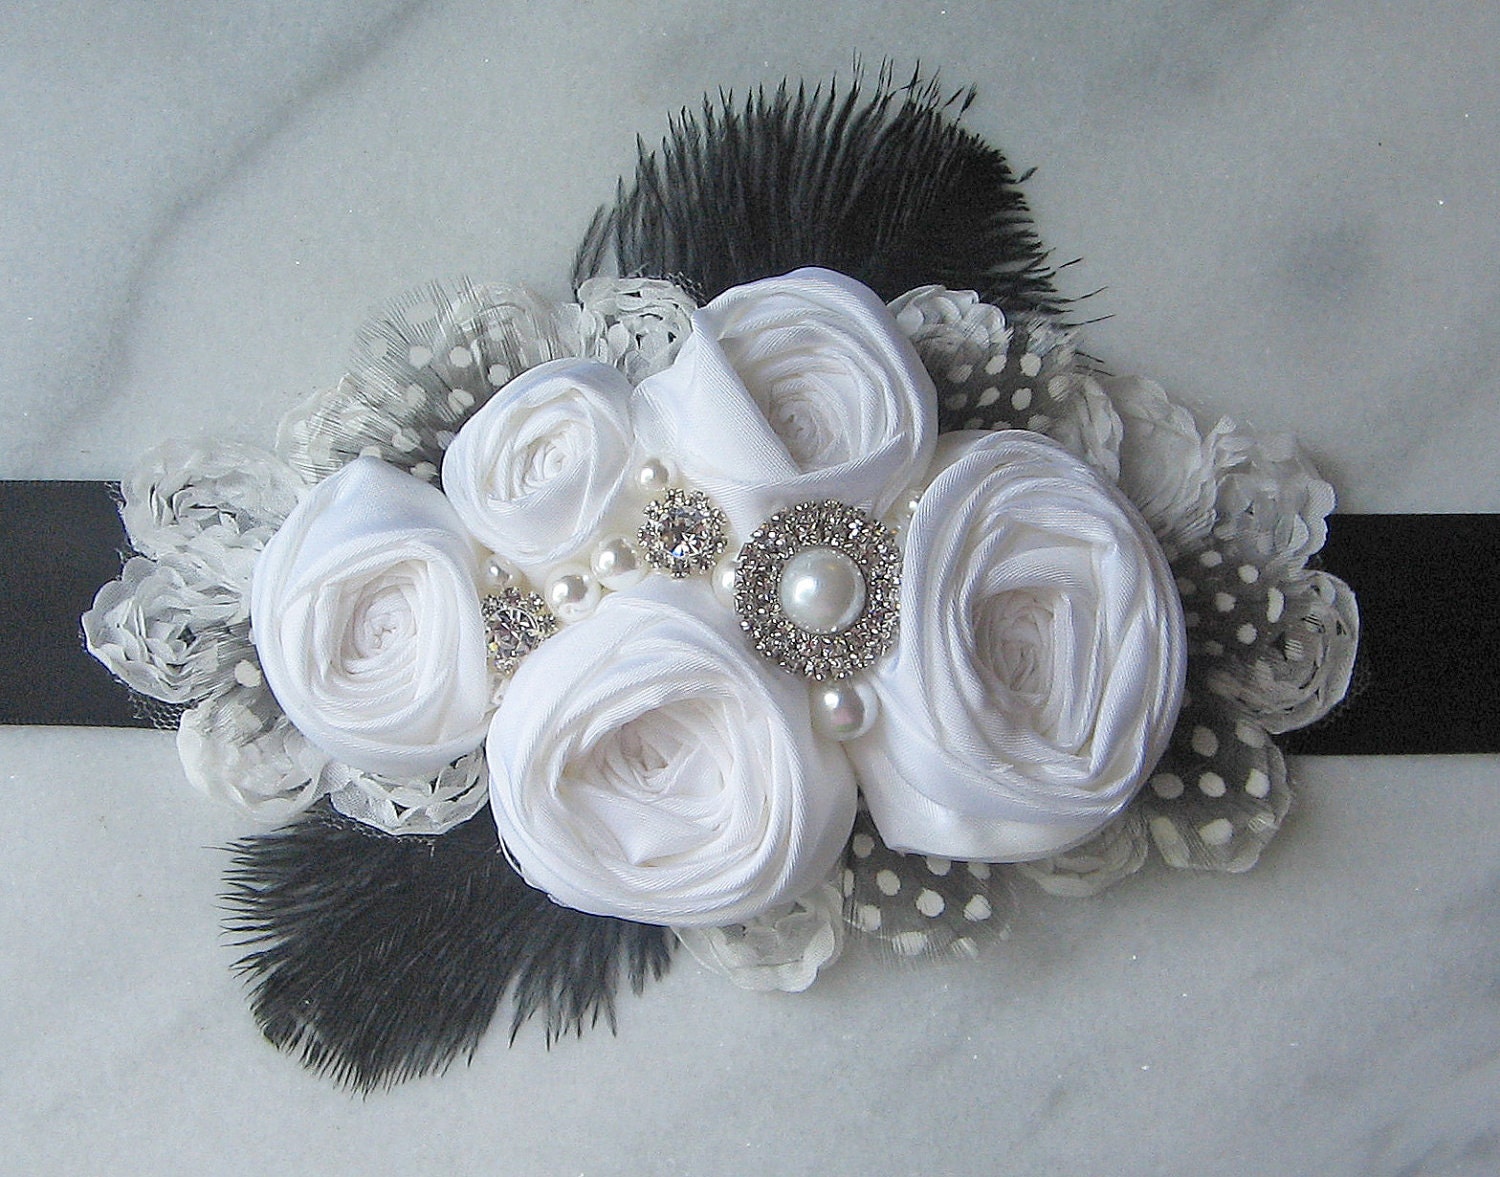 Bridal Sash, Black and White Sash, Pearls, Rhinestones, Roses, Feathers, Wedding Dress Sash - KEIRA